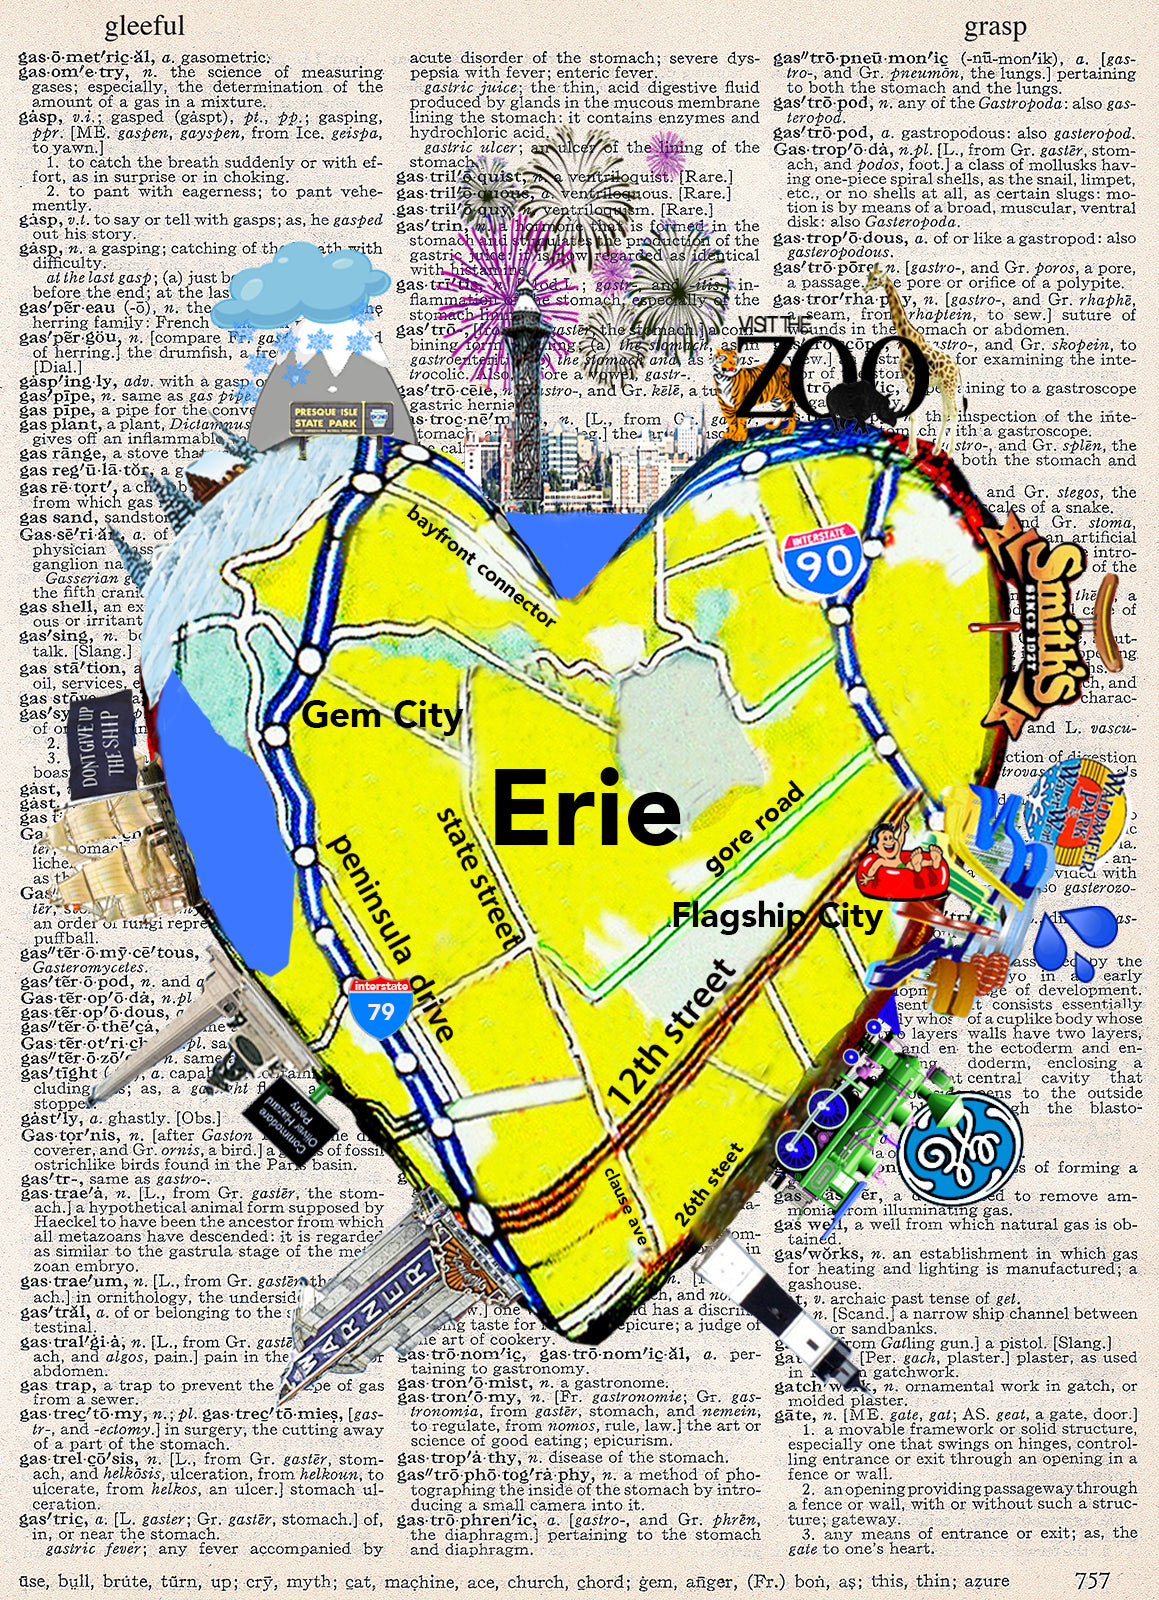 ERIE HEART PRINT